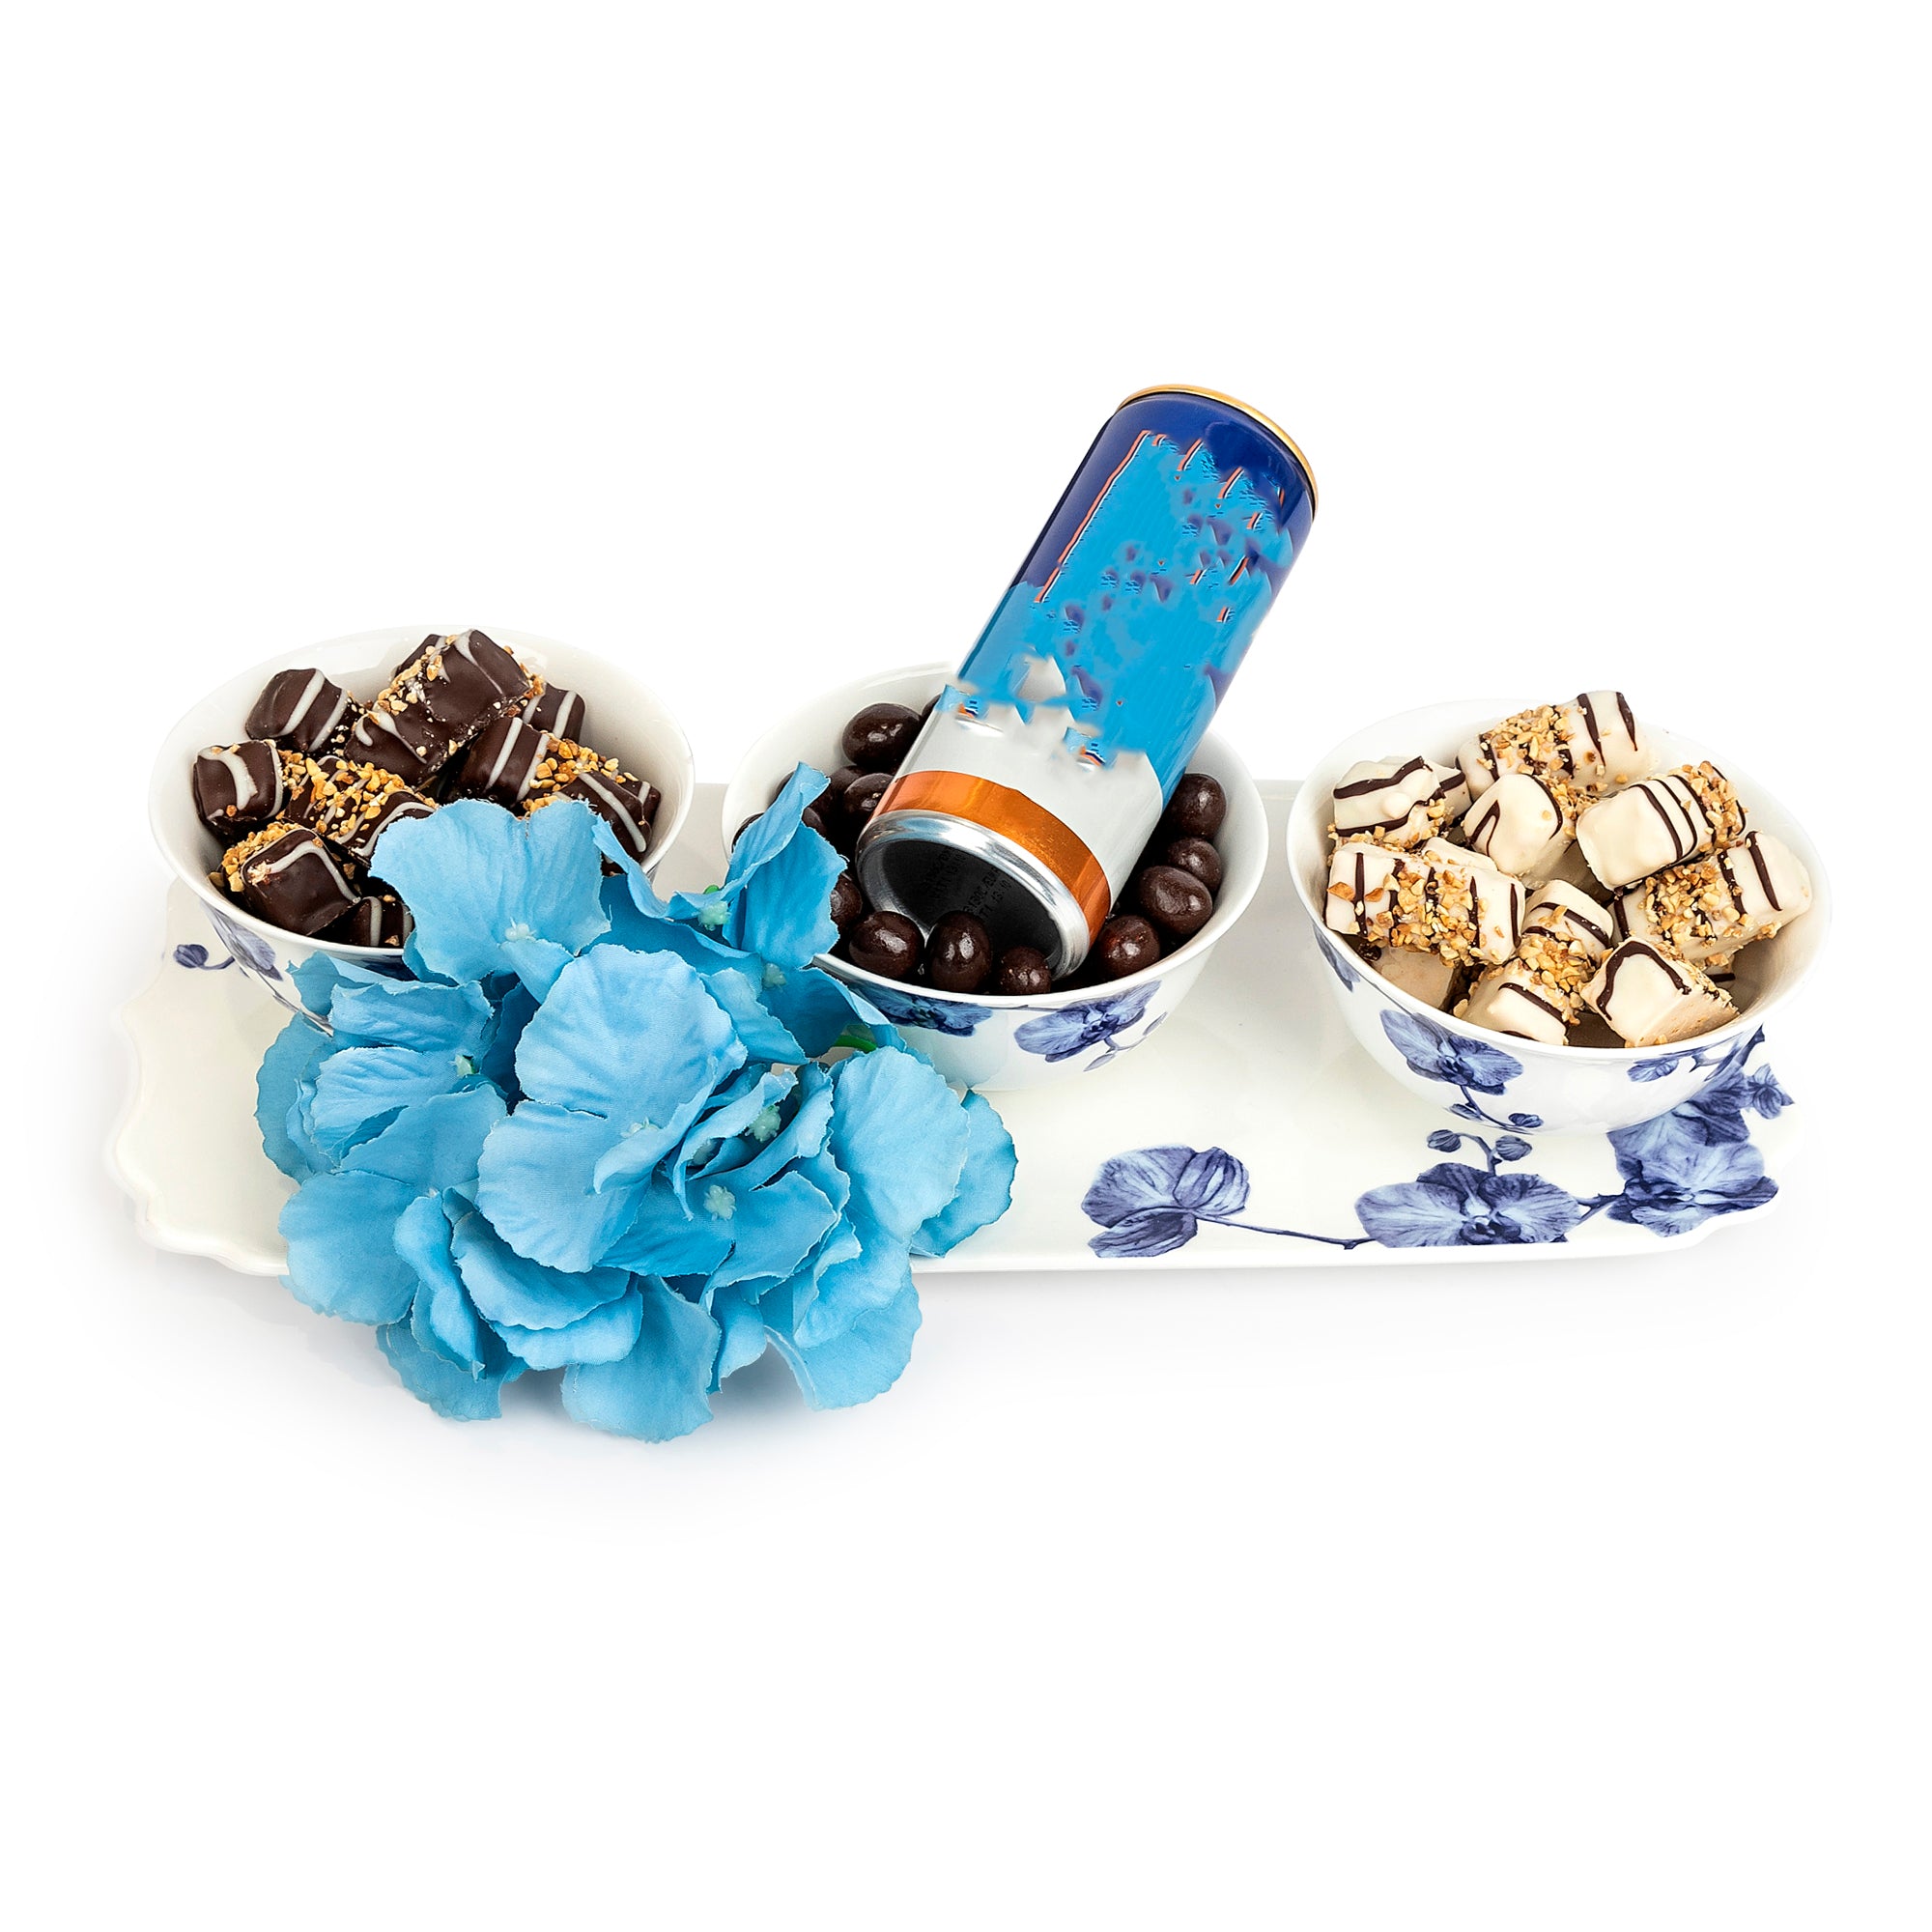 Purim Gift 4pc Bowl Set filled with Chocolates Basket Mishloach Manos